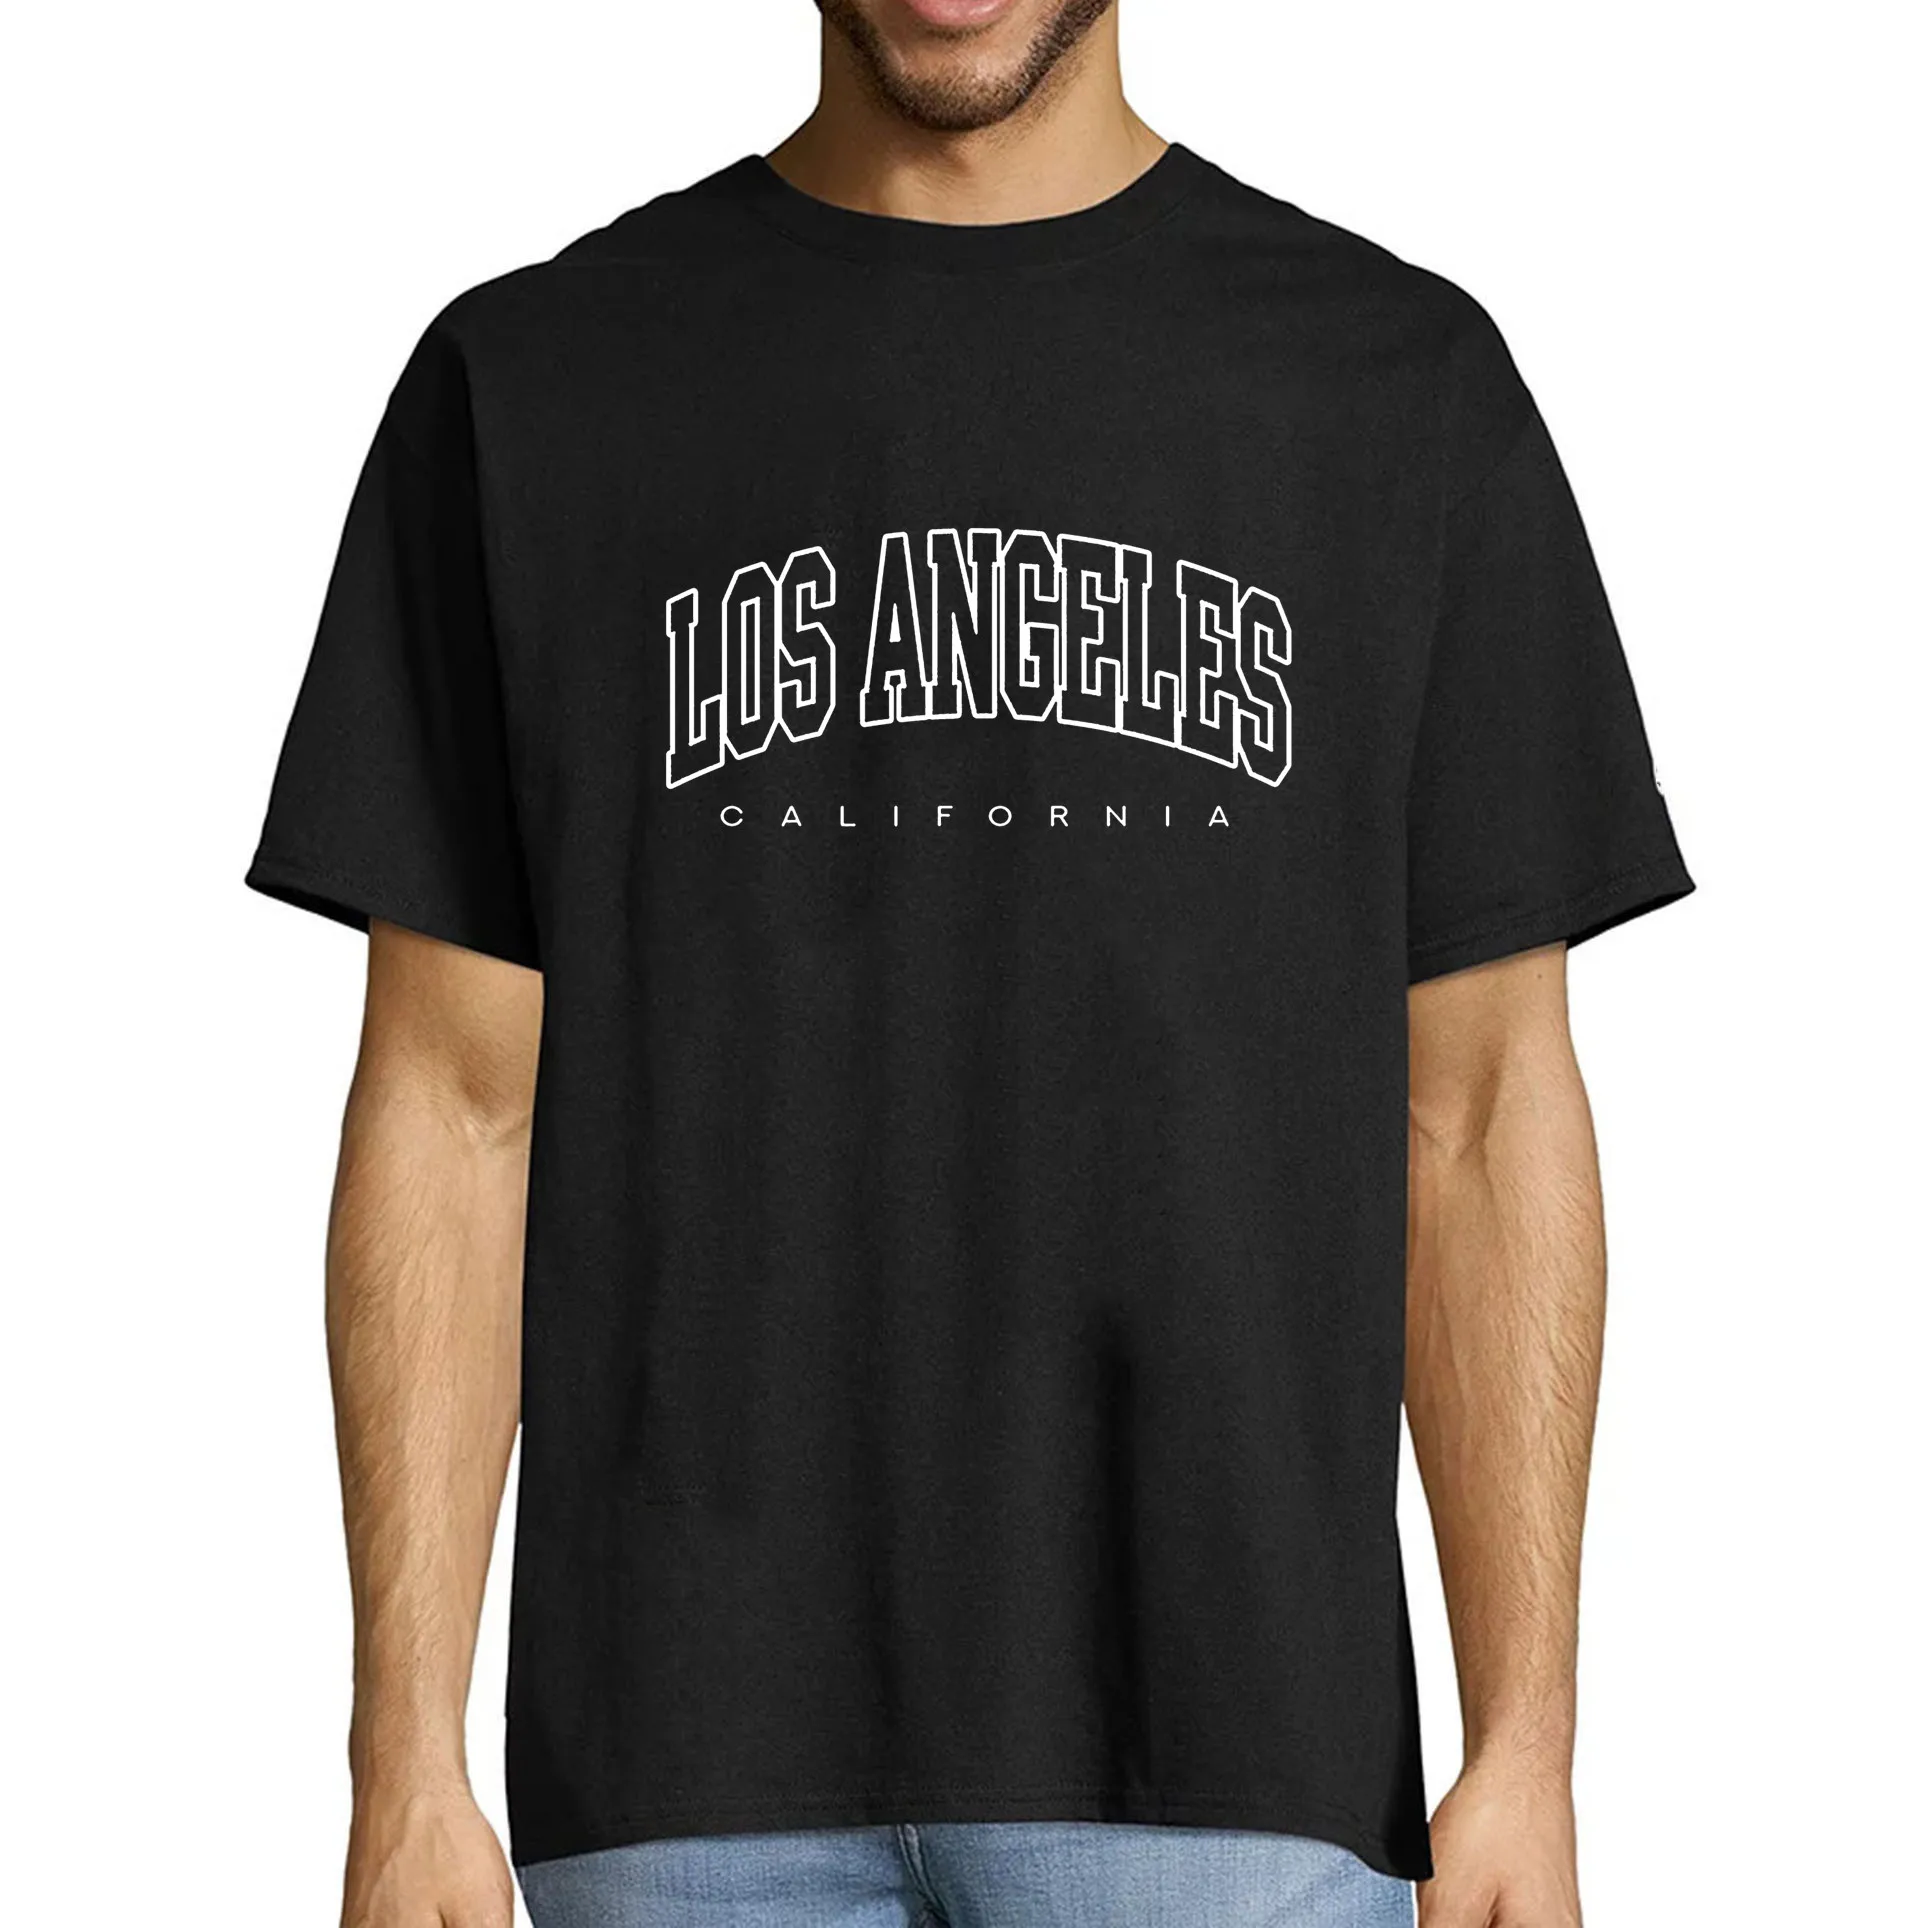 Los Angeles California Funny Letter Men Cotton T-shirt Boy Summer Short Sleeve O Neck Tops Tee Women CLothes,Drop Ship